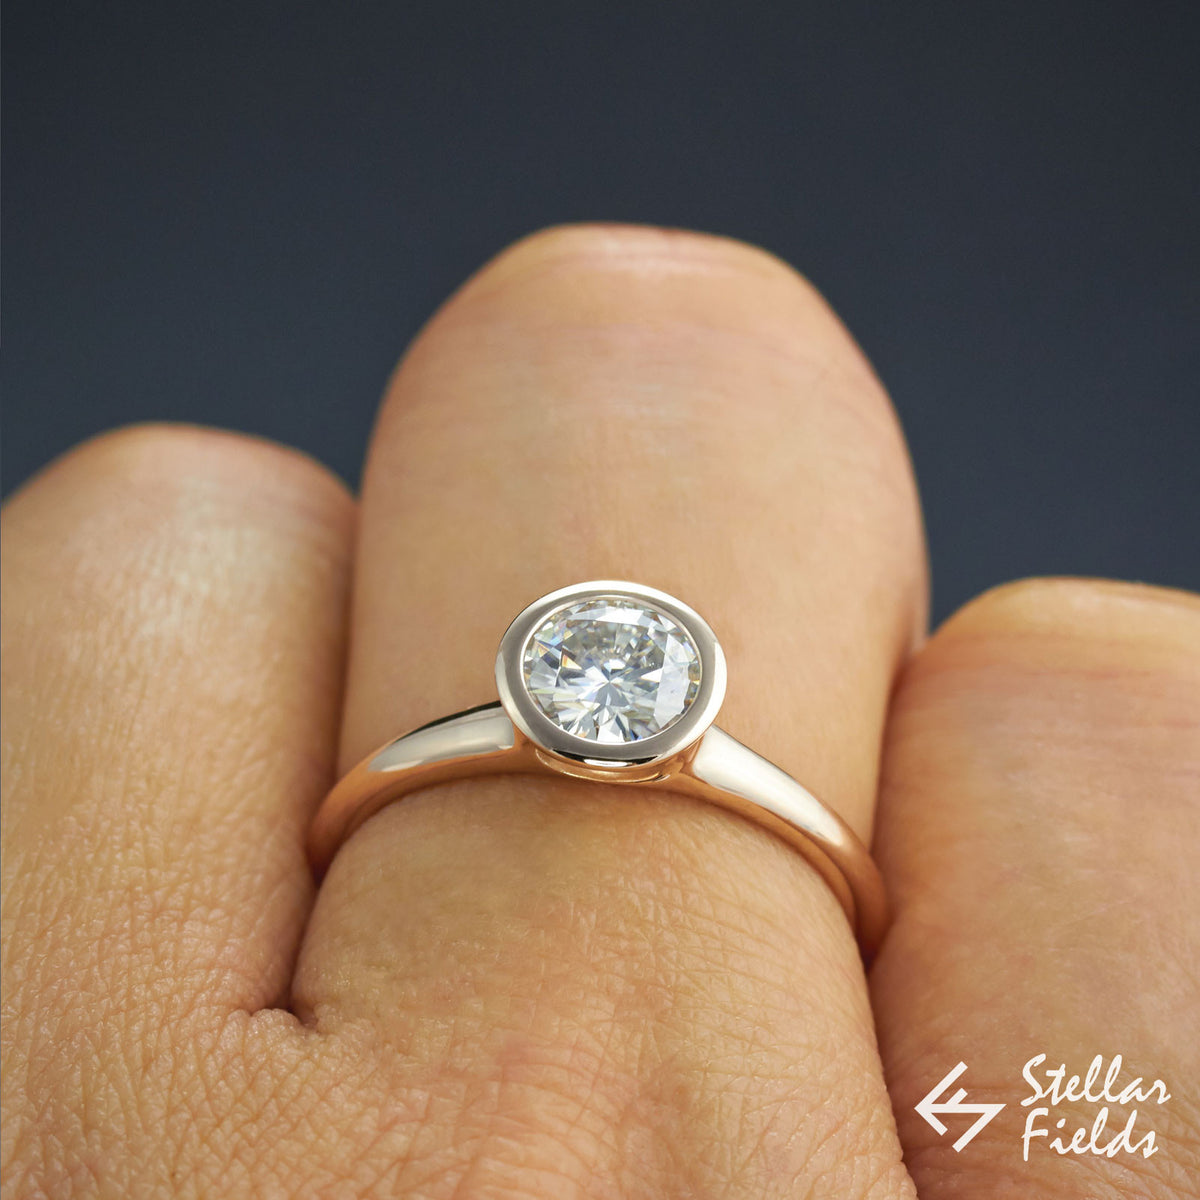 1carat Round Solitaire Diamond full bezel set engagement ring in 14k rose gold